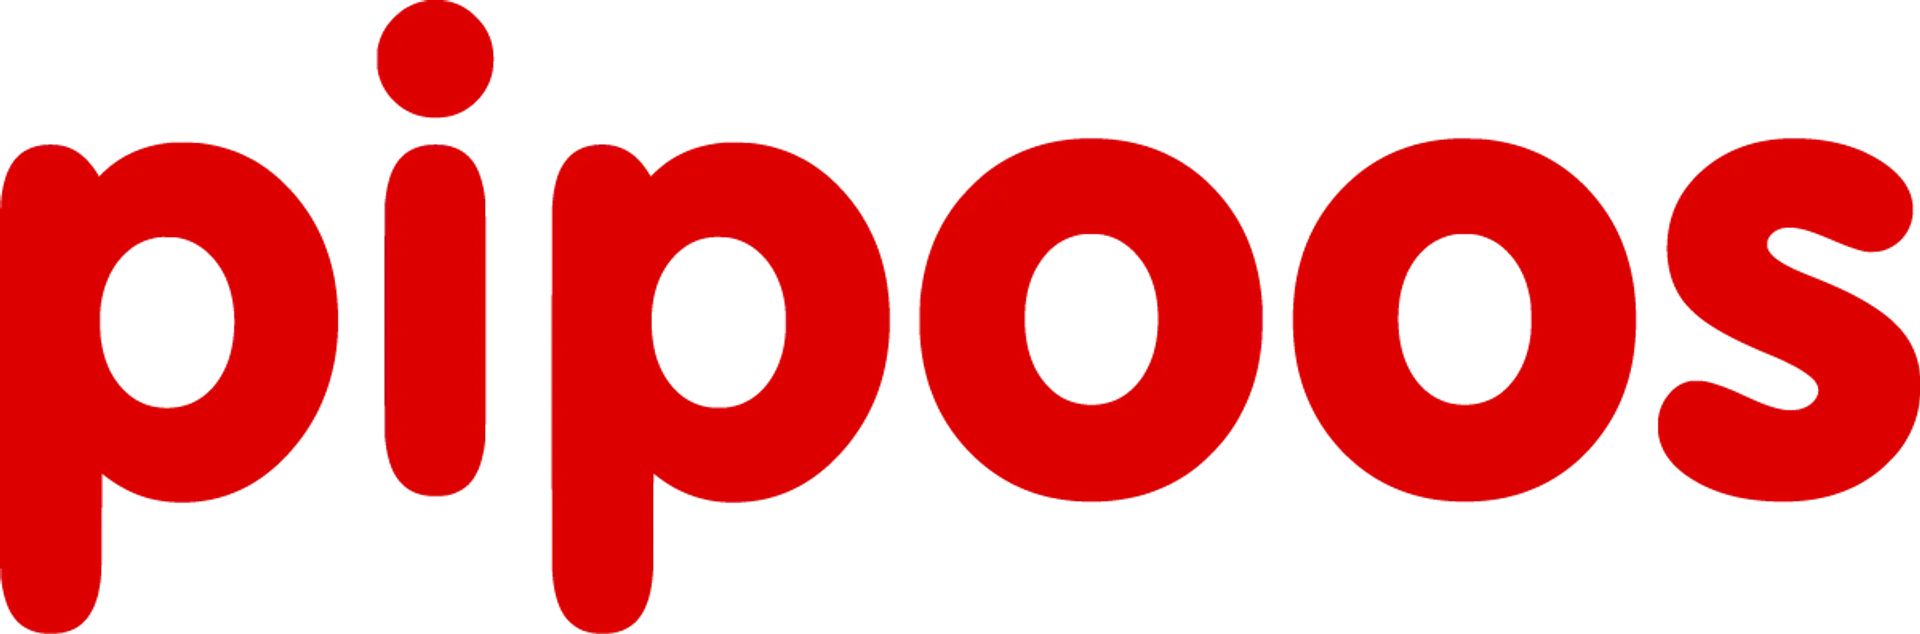 PIPOOS logo